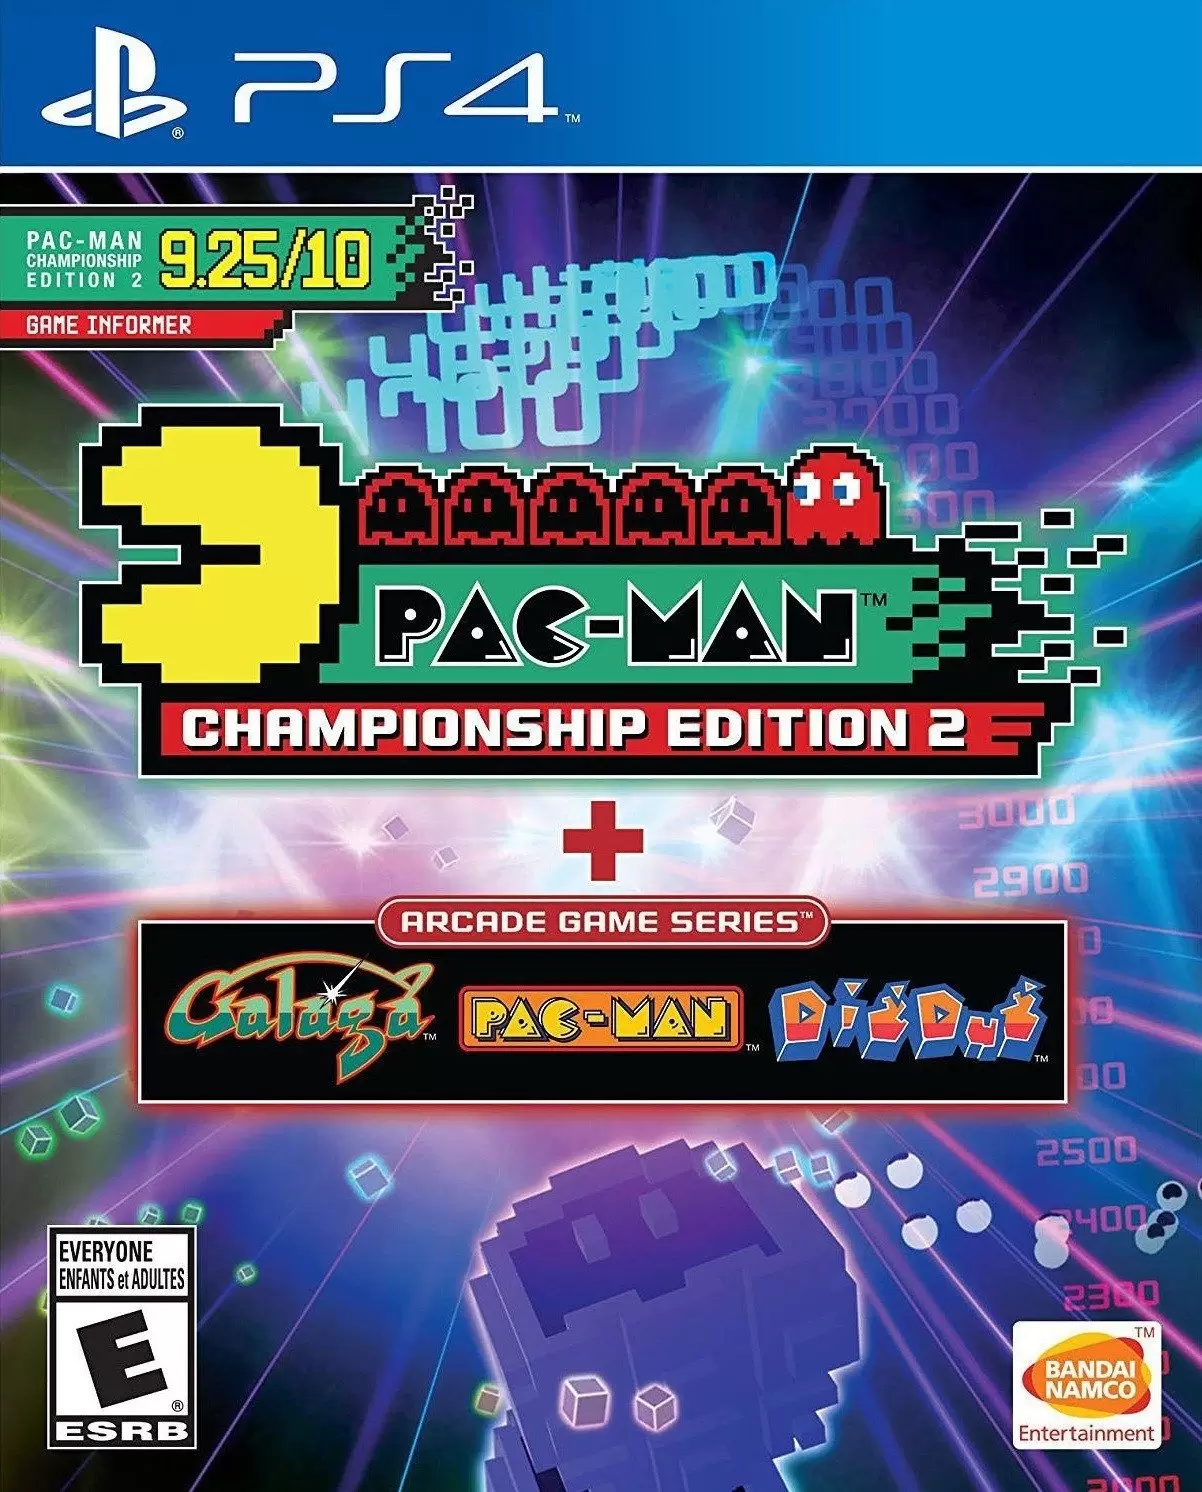 PS4 Games - Pac-Man Championship Edition 2 + Arcade Game Series